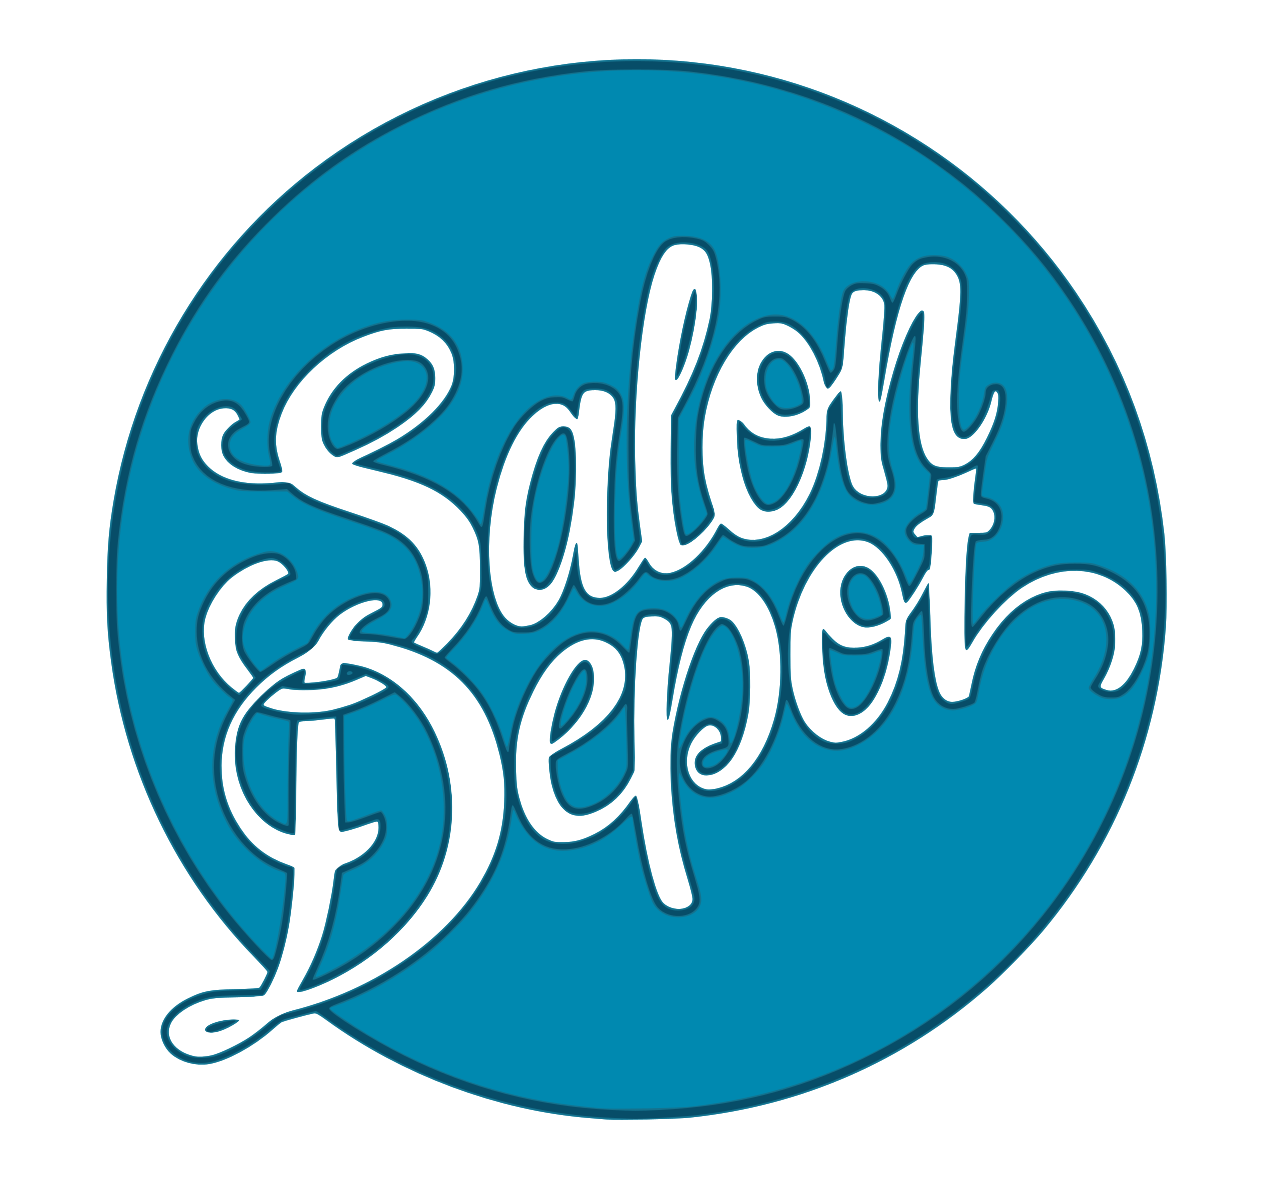 Salon Depot